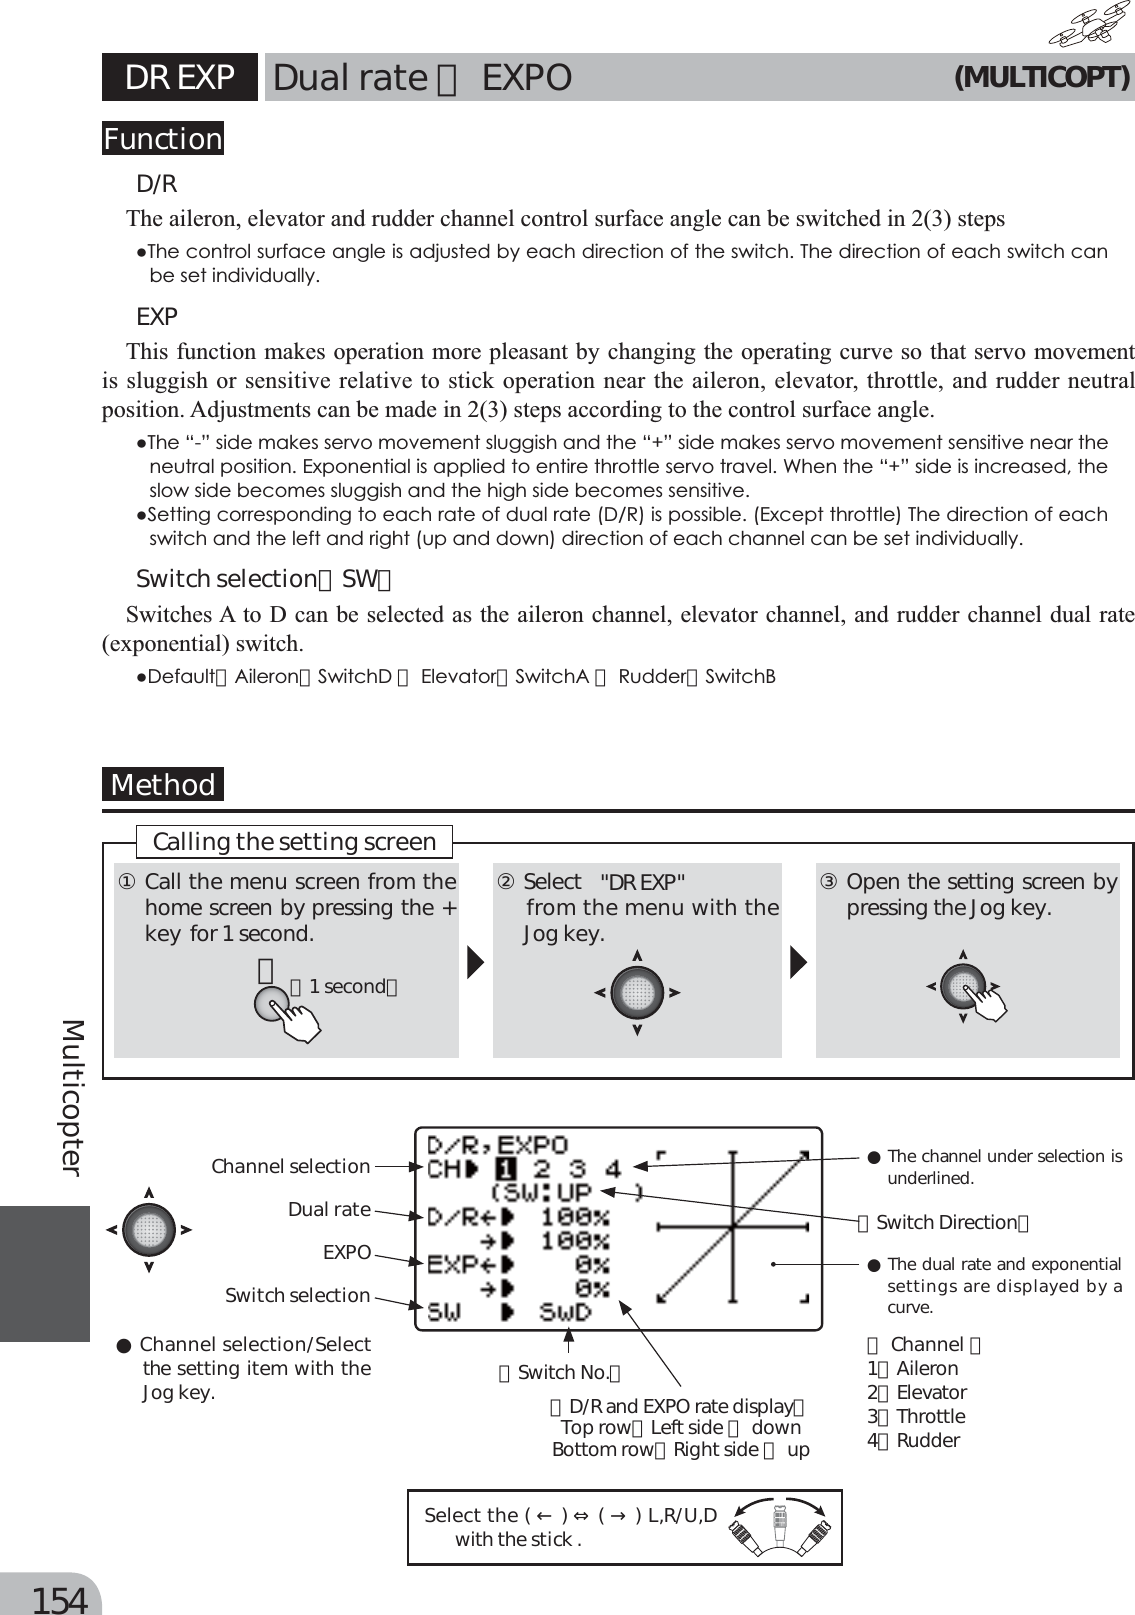 Page 74 of Futaba T6K-24G Radio Control User Manual MANUAL 6K E  0521